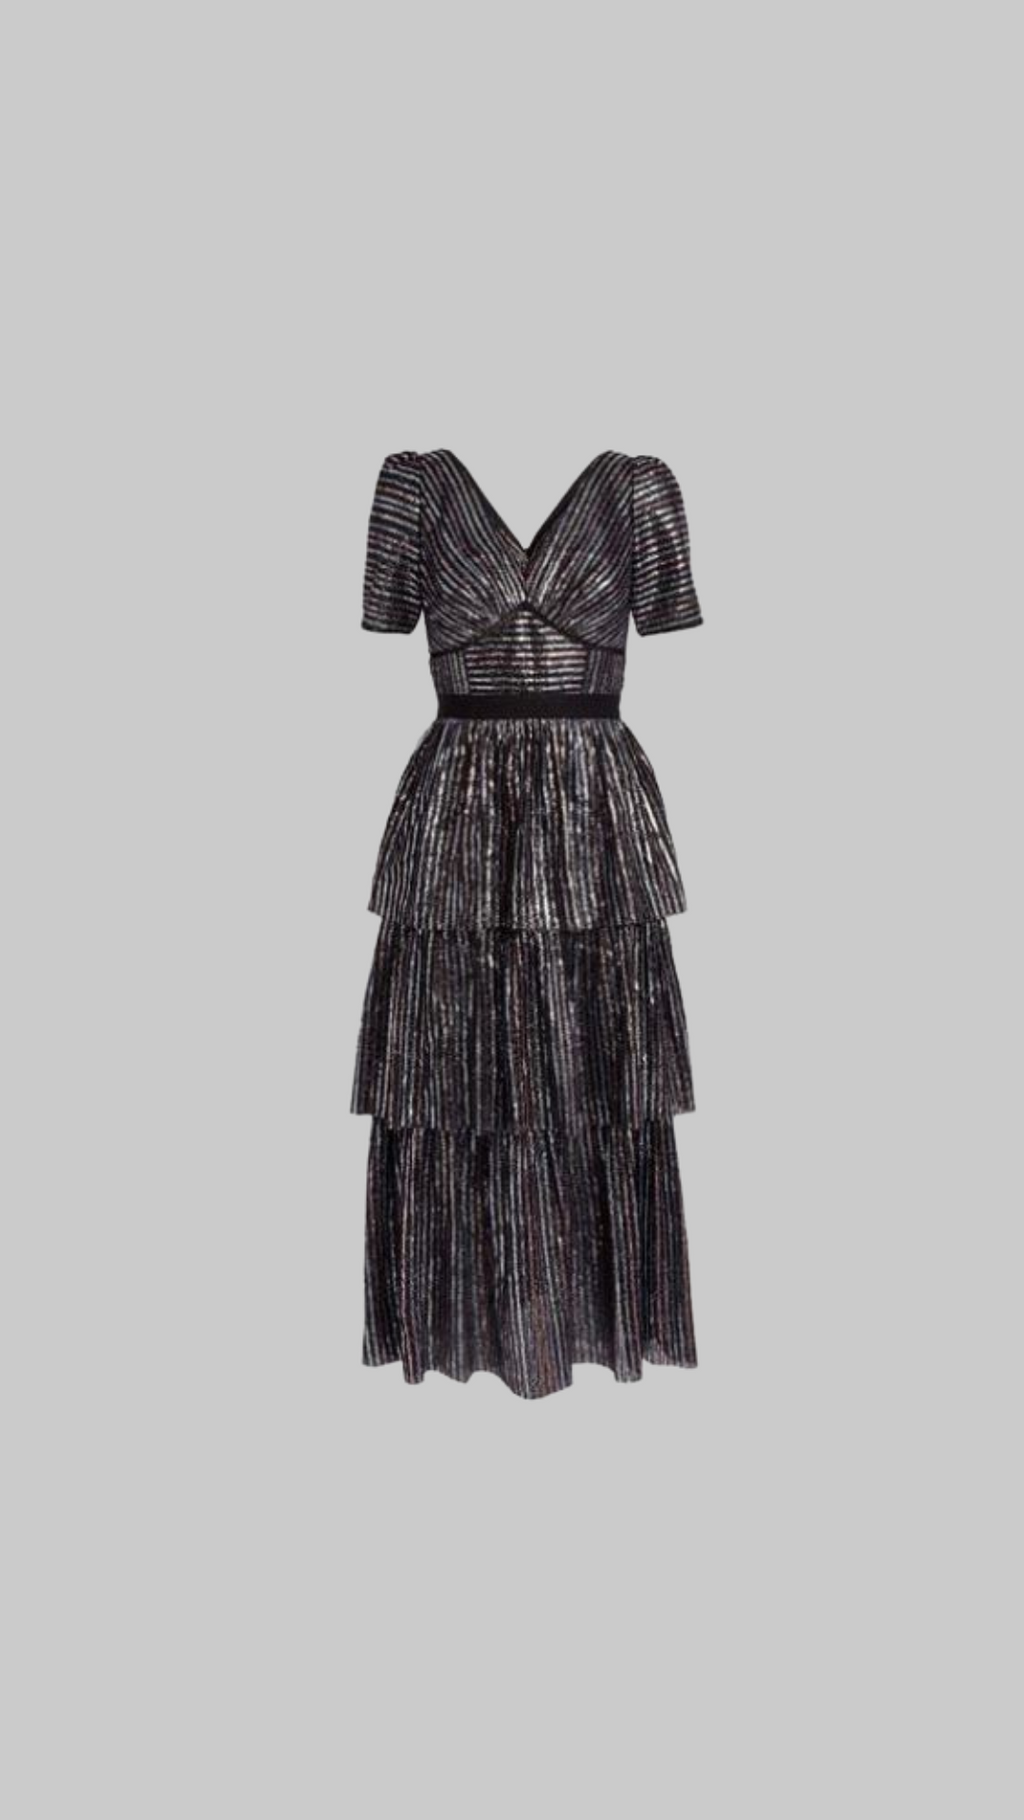 Rent Buy Self-Portrait Sequin Stripe Midi Dress